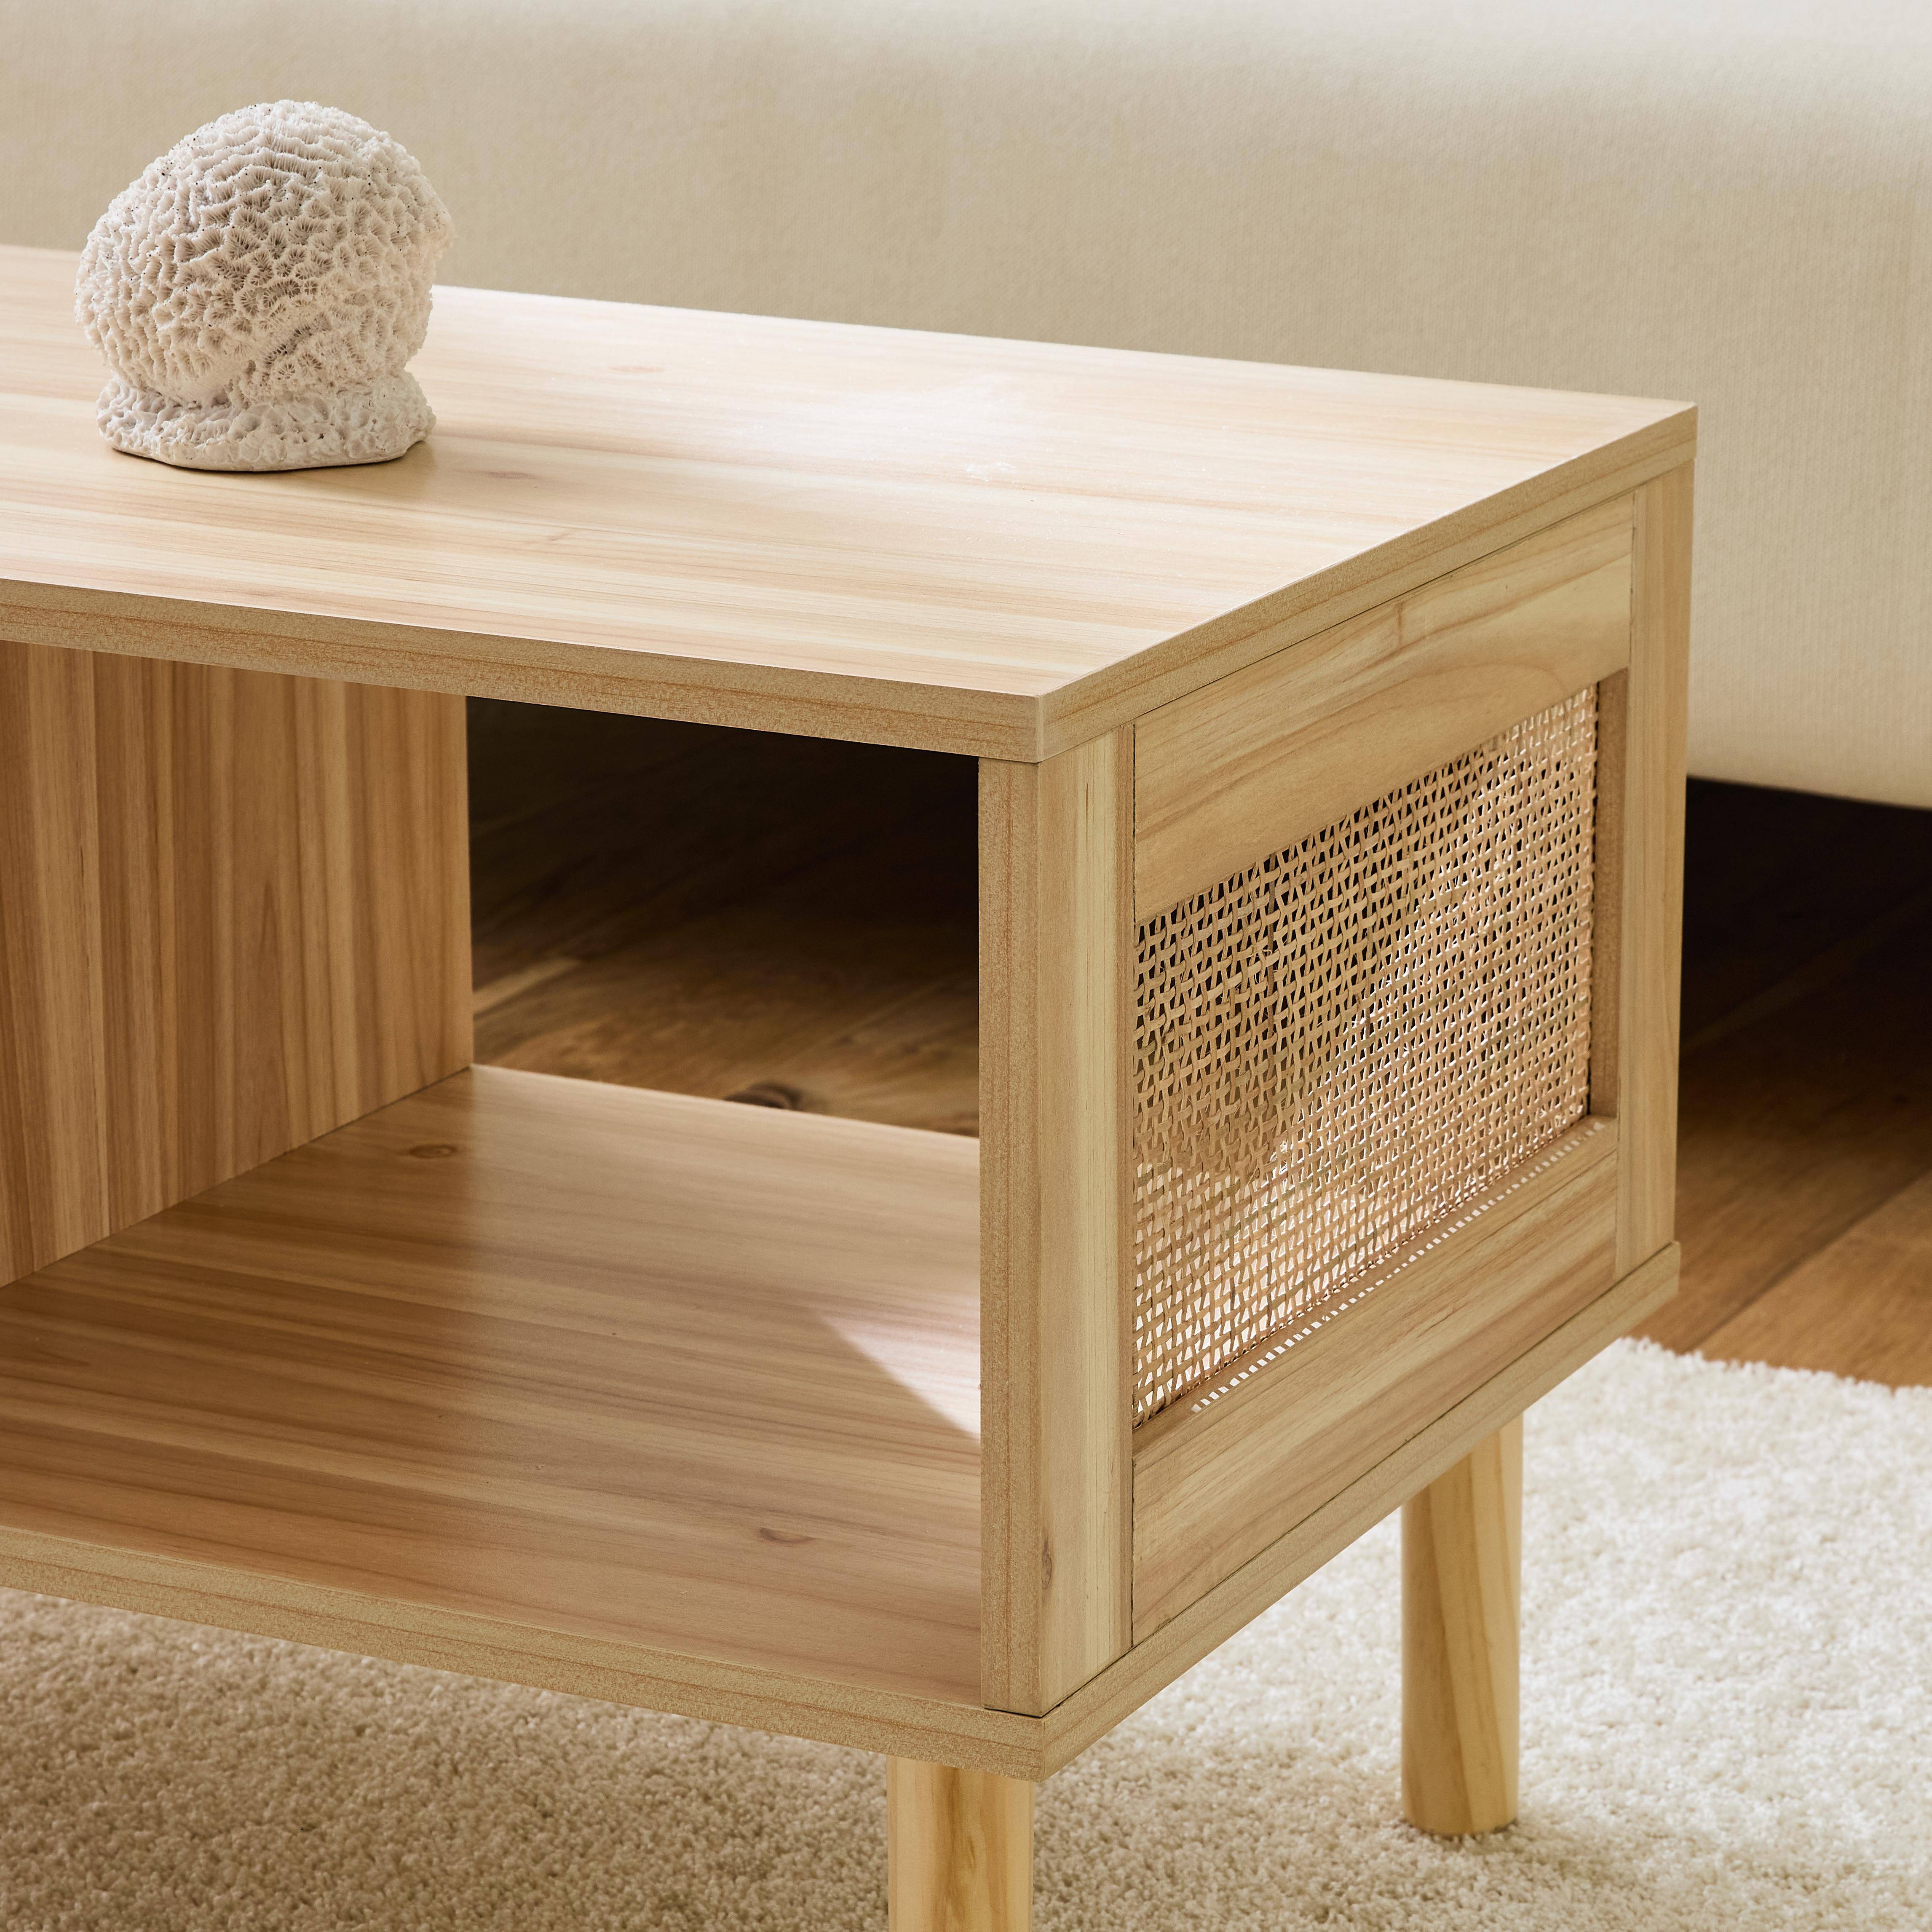 Woven rattan coffee table, 80x40x40cm, Camargue, Natural wood colour,sweeek,Photo2